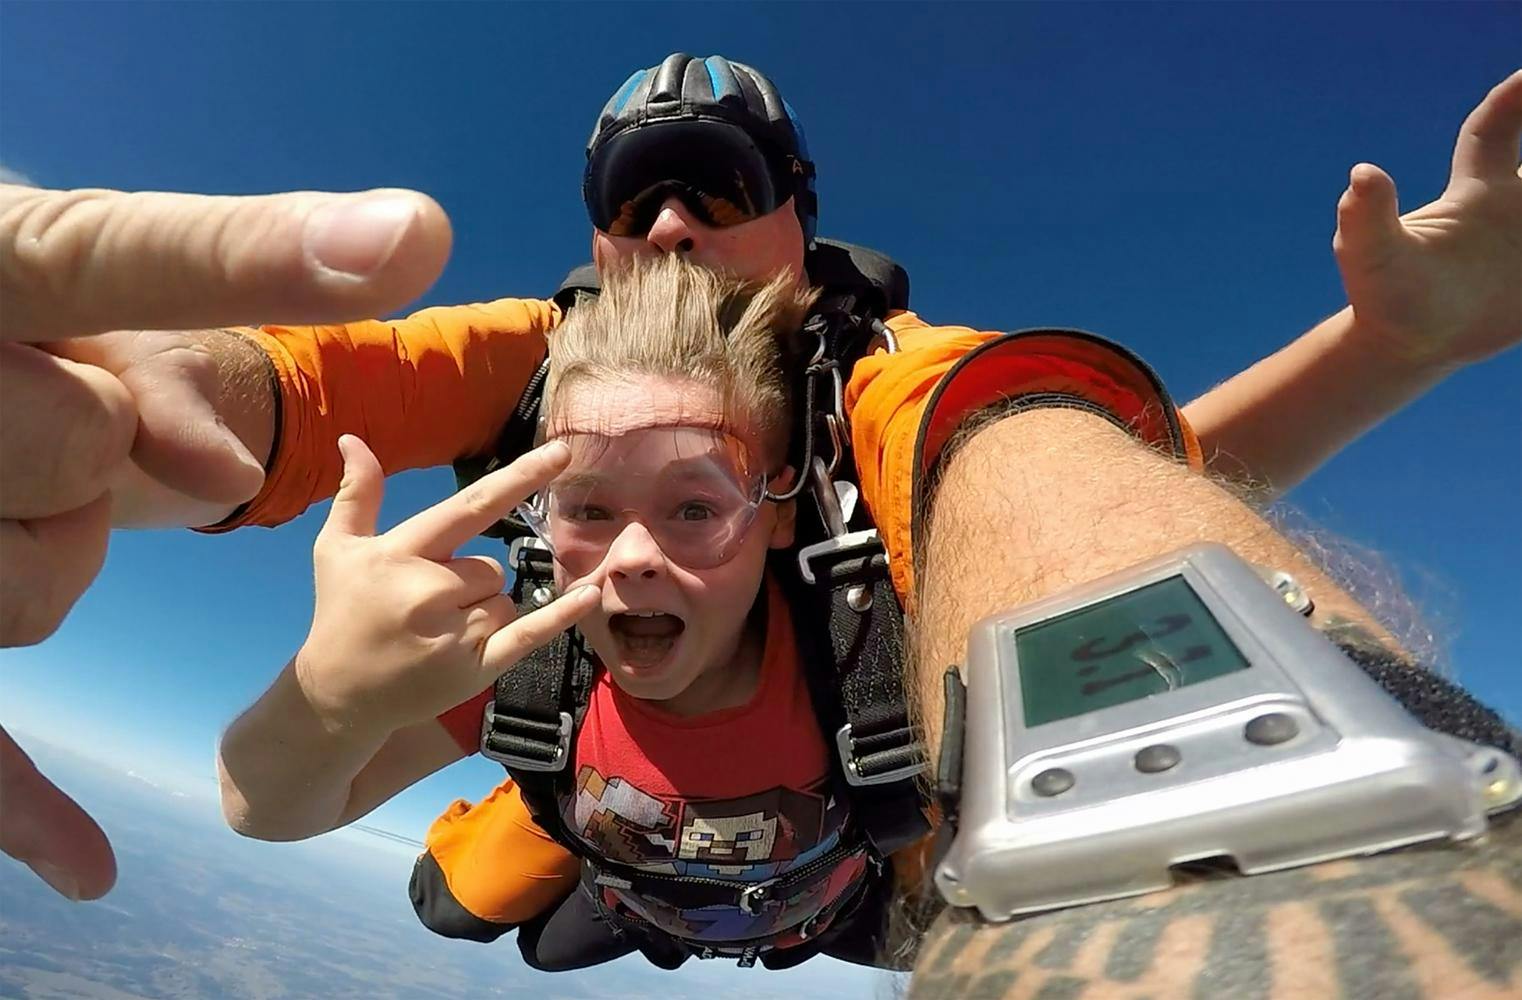 Fallschirm Tandemsprung | 60 Sekunden Fall aus 4.000 Metern